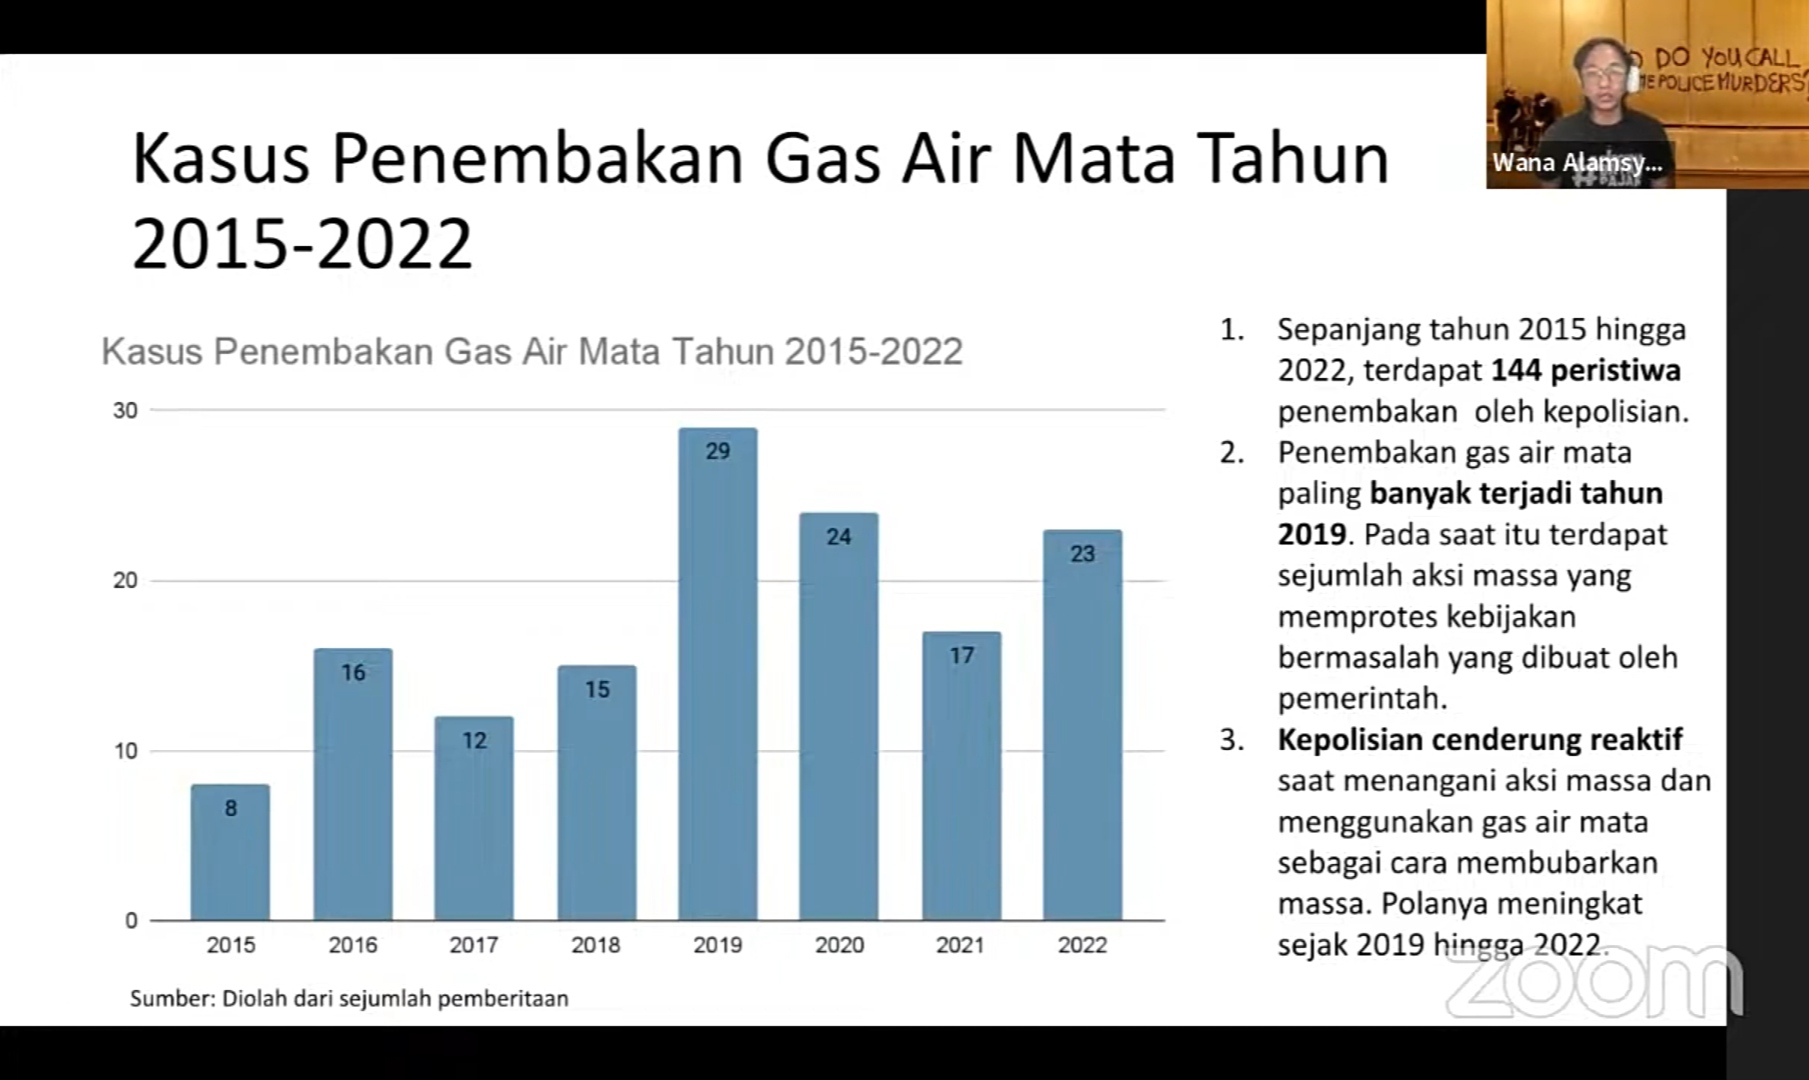 144 Peristiwa Penembakan Gas Air Mata Sepanjang 2015-2022 Dicatat ICW: Paling Banyak di Tahun 2019